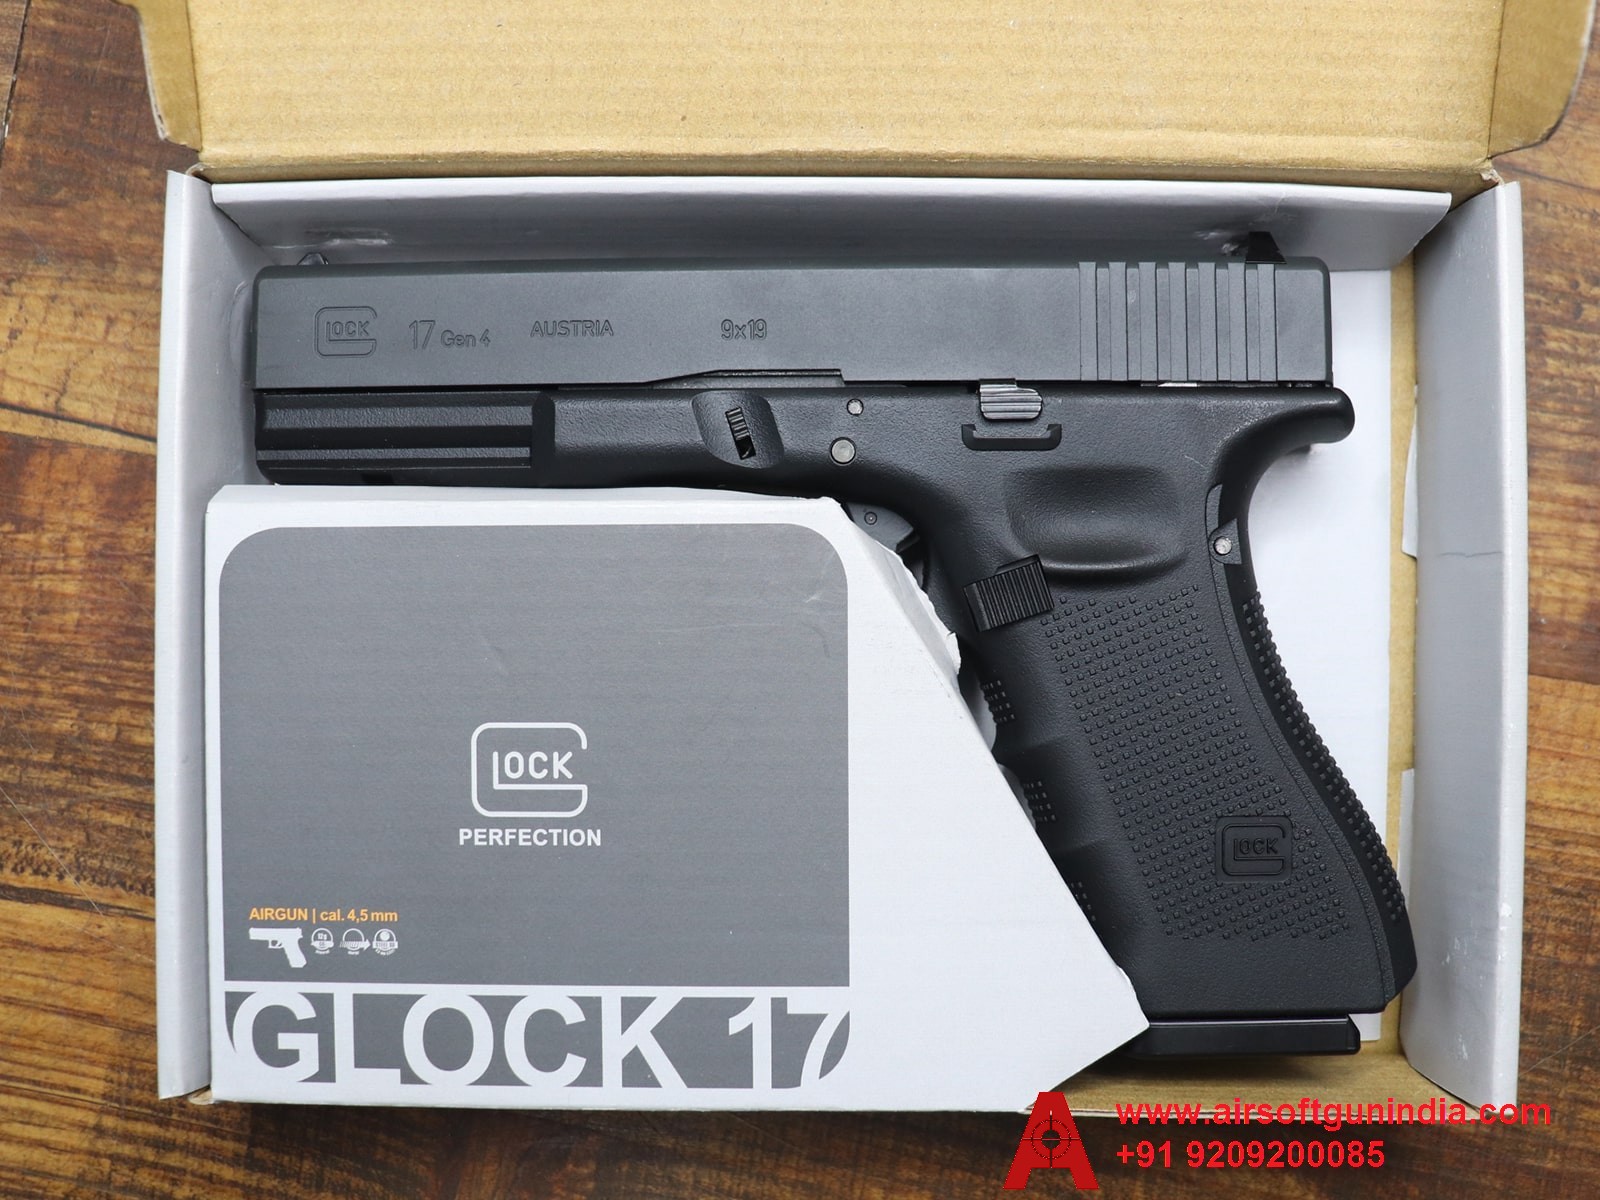 Umarex Glock 17 Generation 4 CO2 .177cal, 4.5mm BB Air Pistol